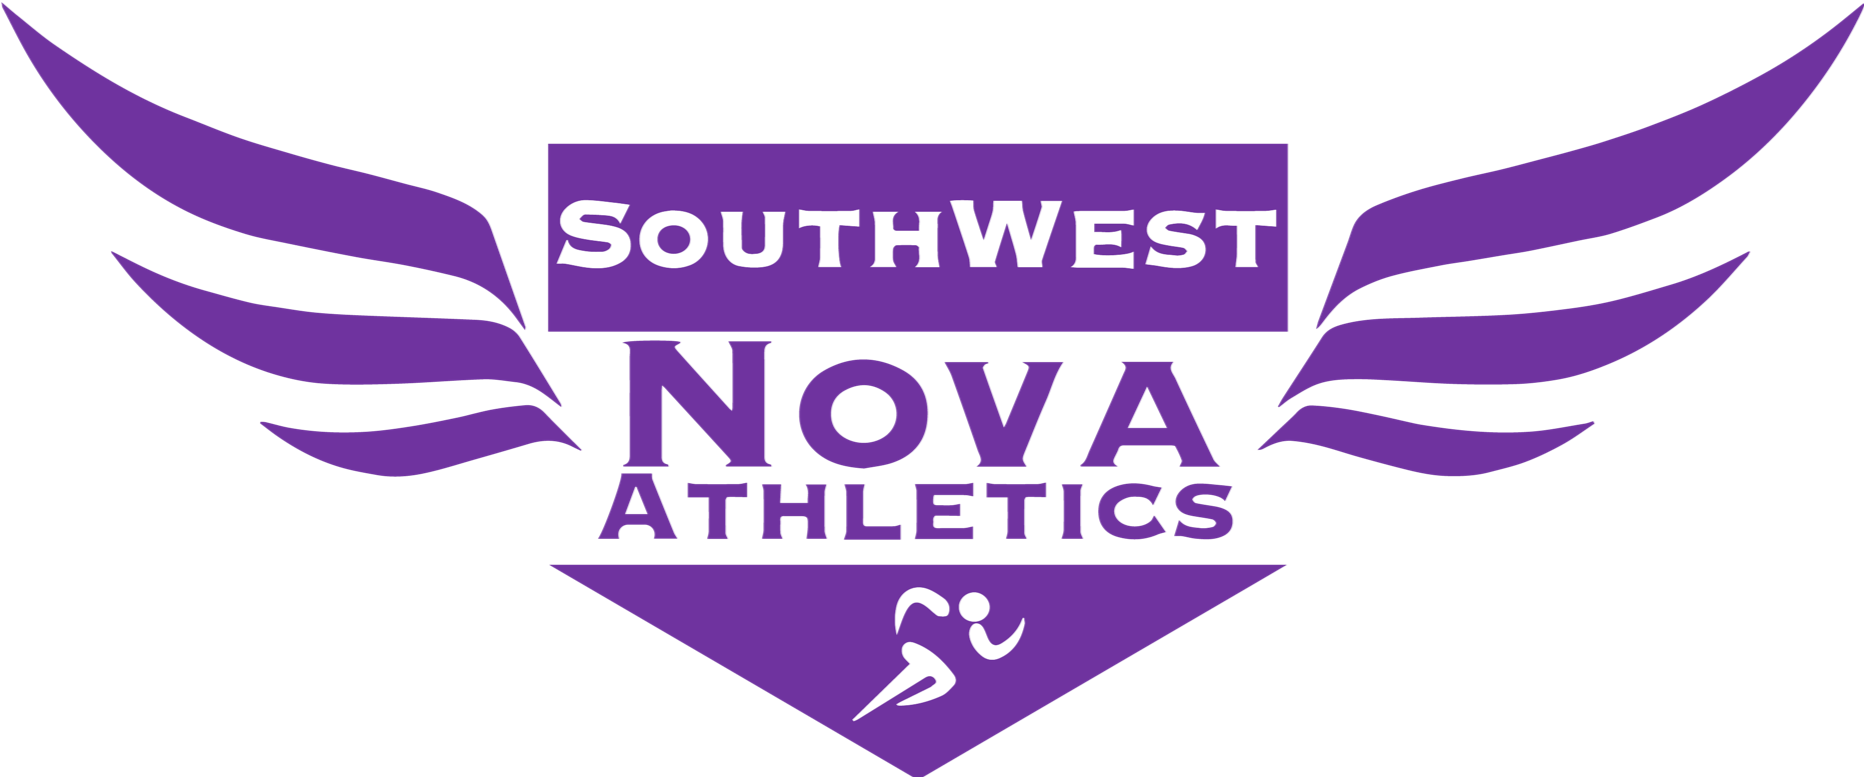 Southwest Nova Athletics